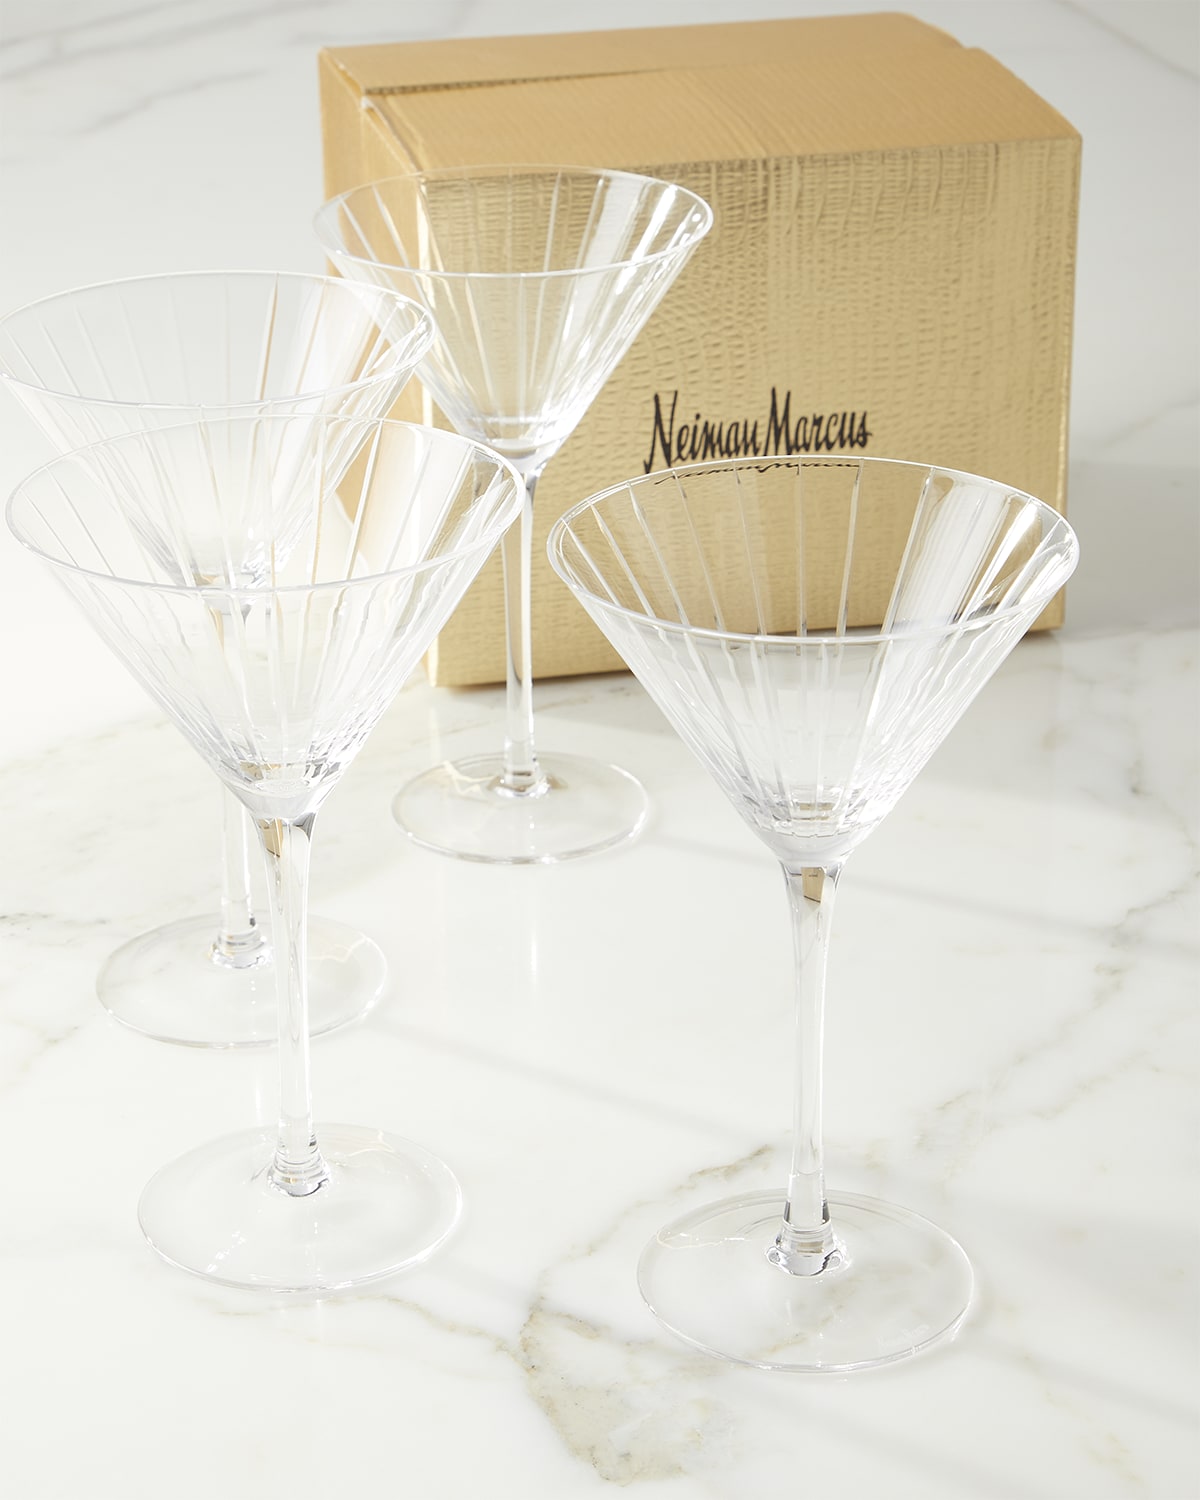 Baccarat Limited Edition Vega Martini Glasses, Set of 2